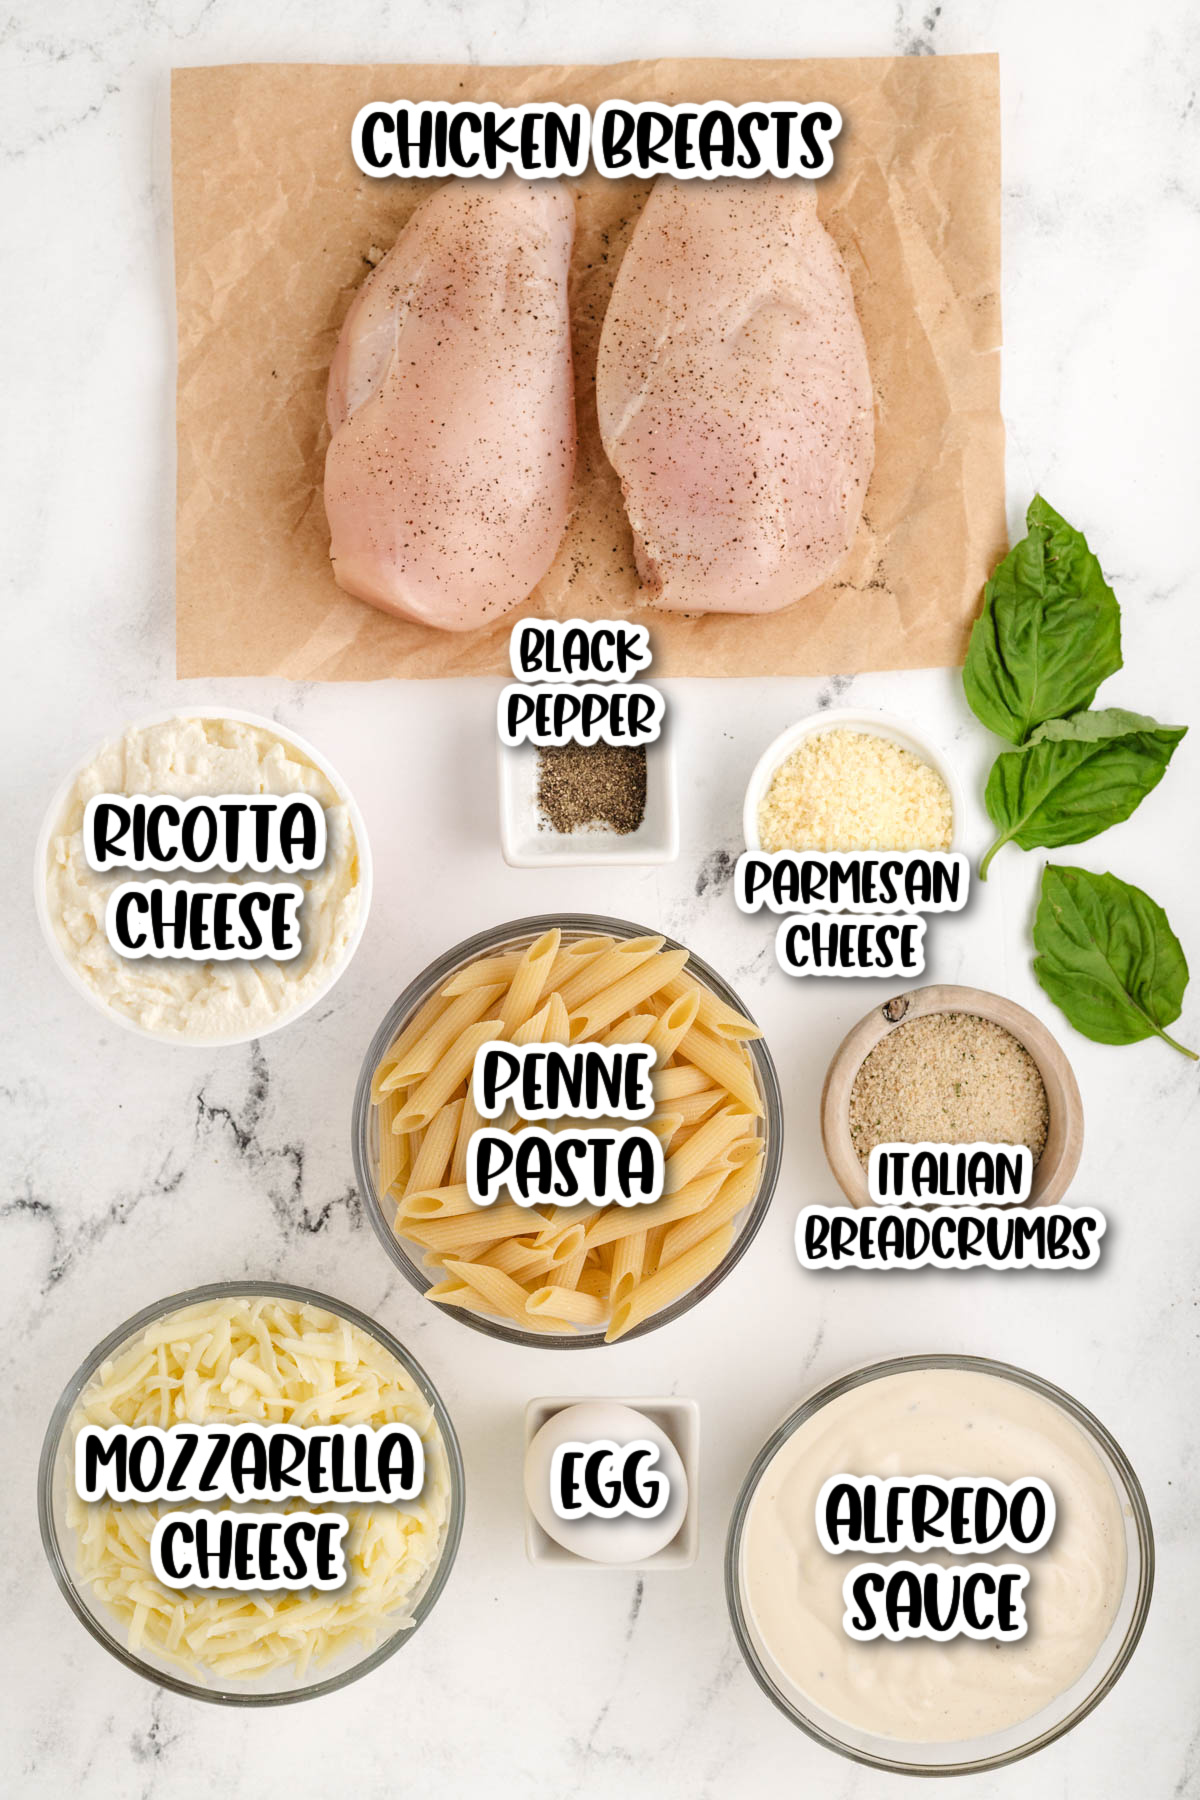 Chicken alfredo bake ingredients on marble counter